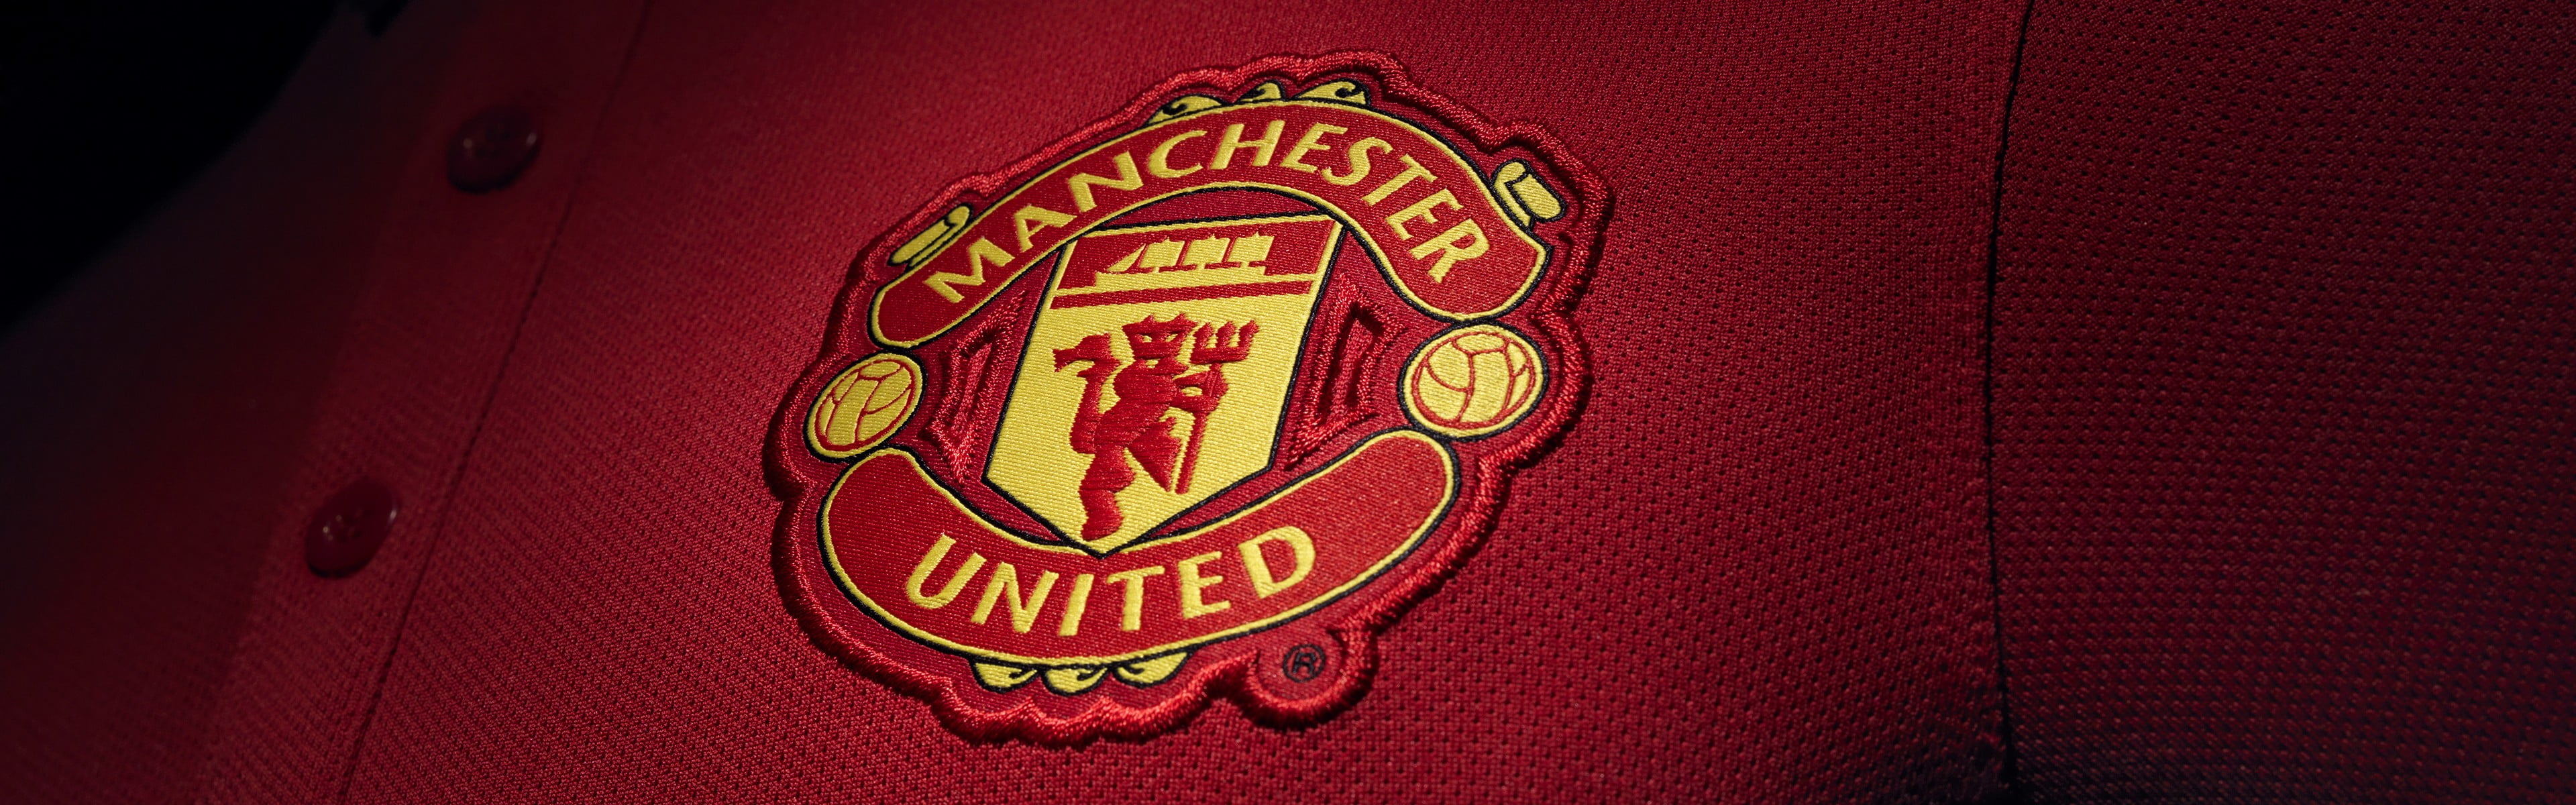 Manchester United , logo, sports jerseys, soccer clubs, Premier League